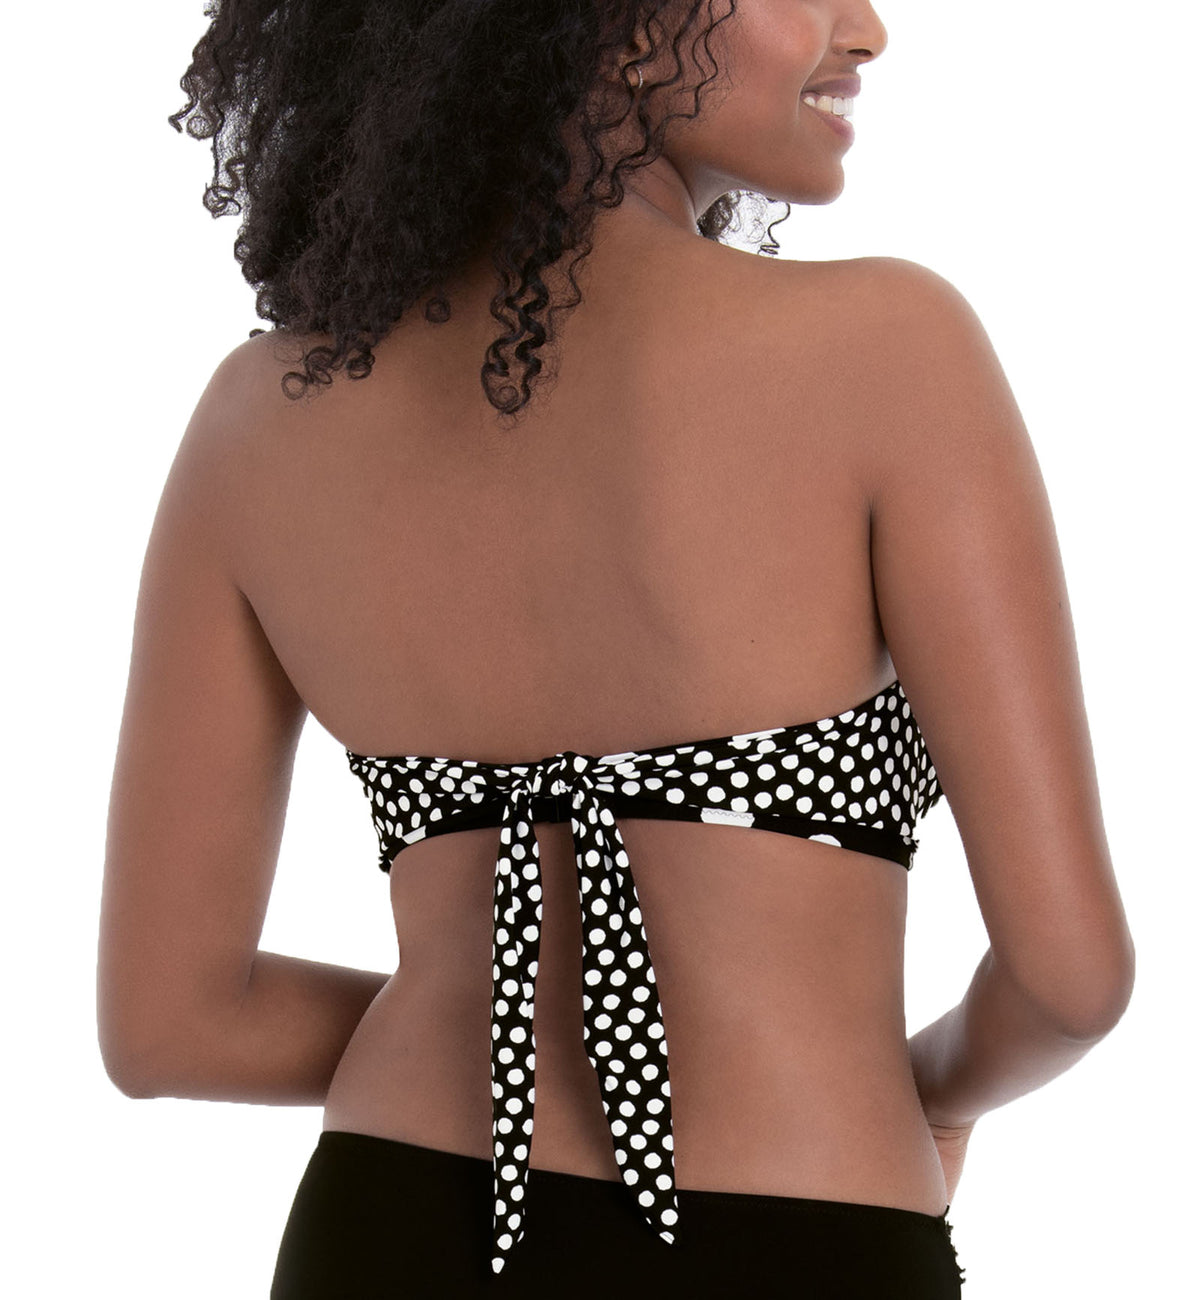 Anita Summer Dot Catalina Molded Underwire Bikini Top (8800-1),30D,Black/White - Black/White,30D